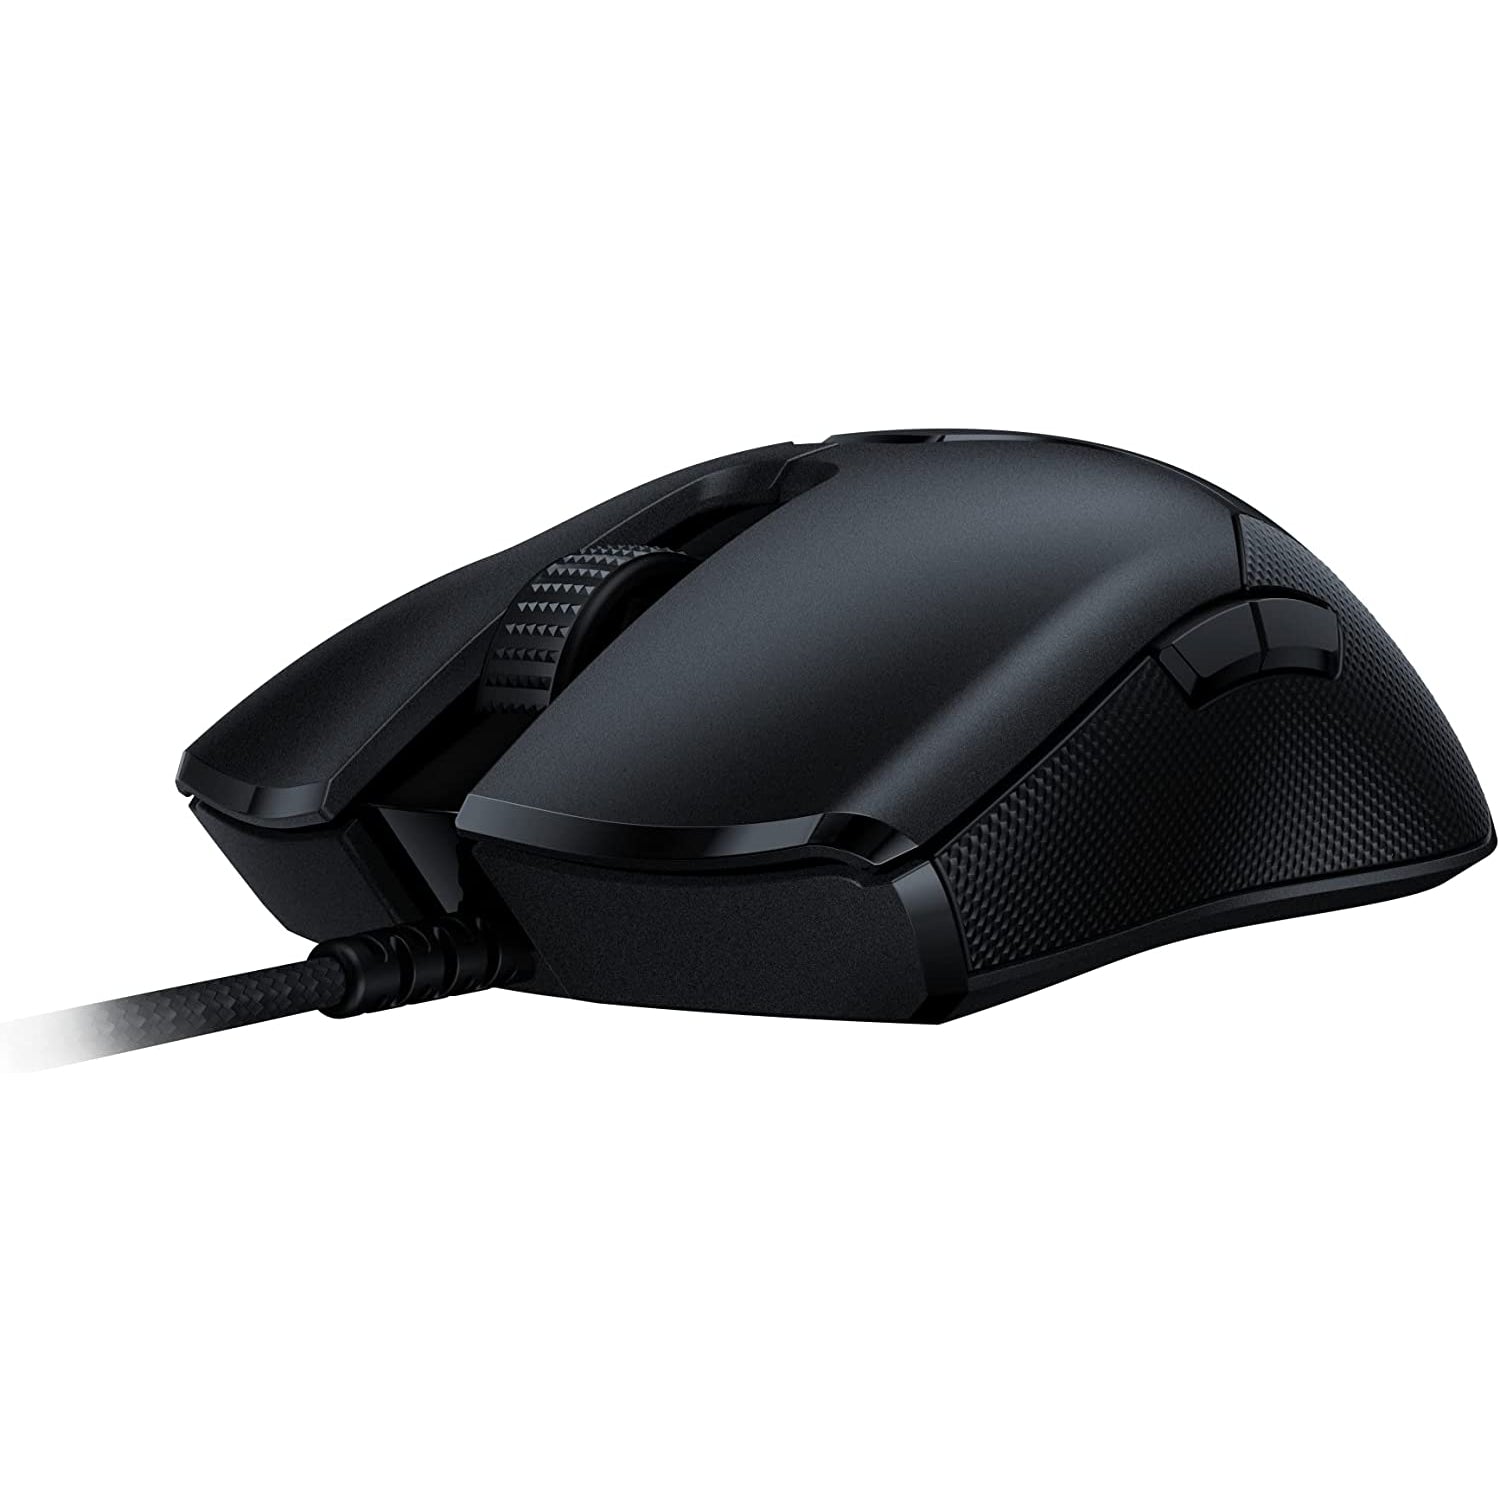 Razer Viper Ambidextrous Wired Gaming Mouse - Black - Refurbished Pristine